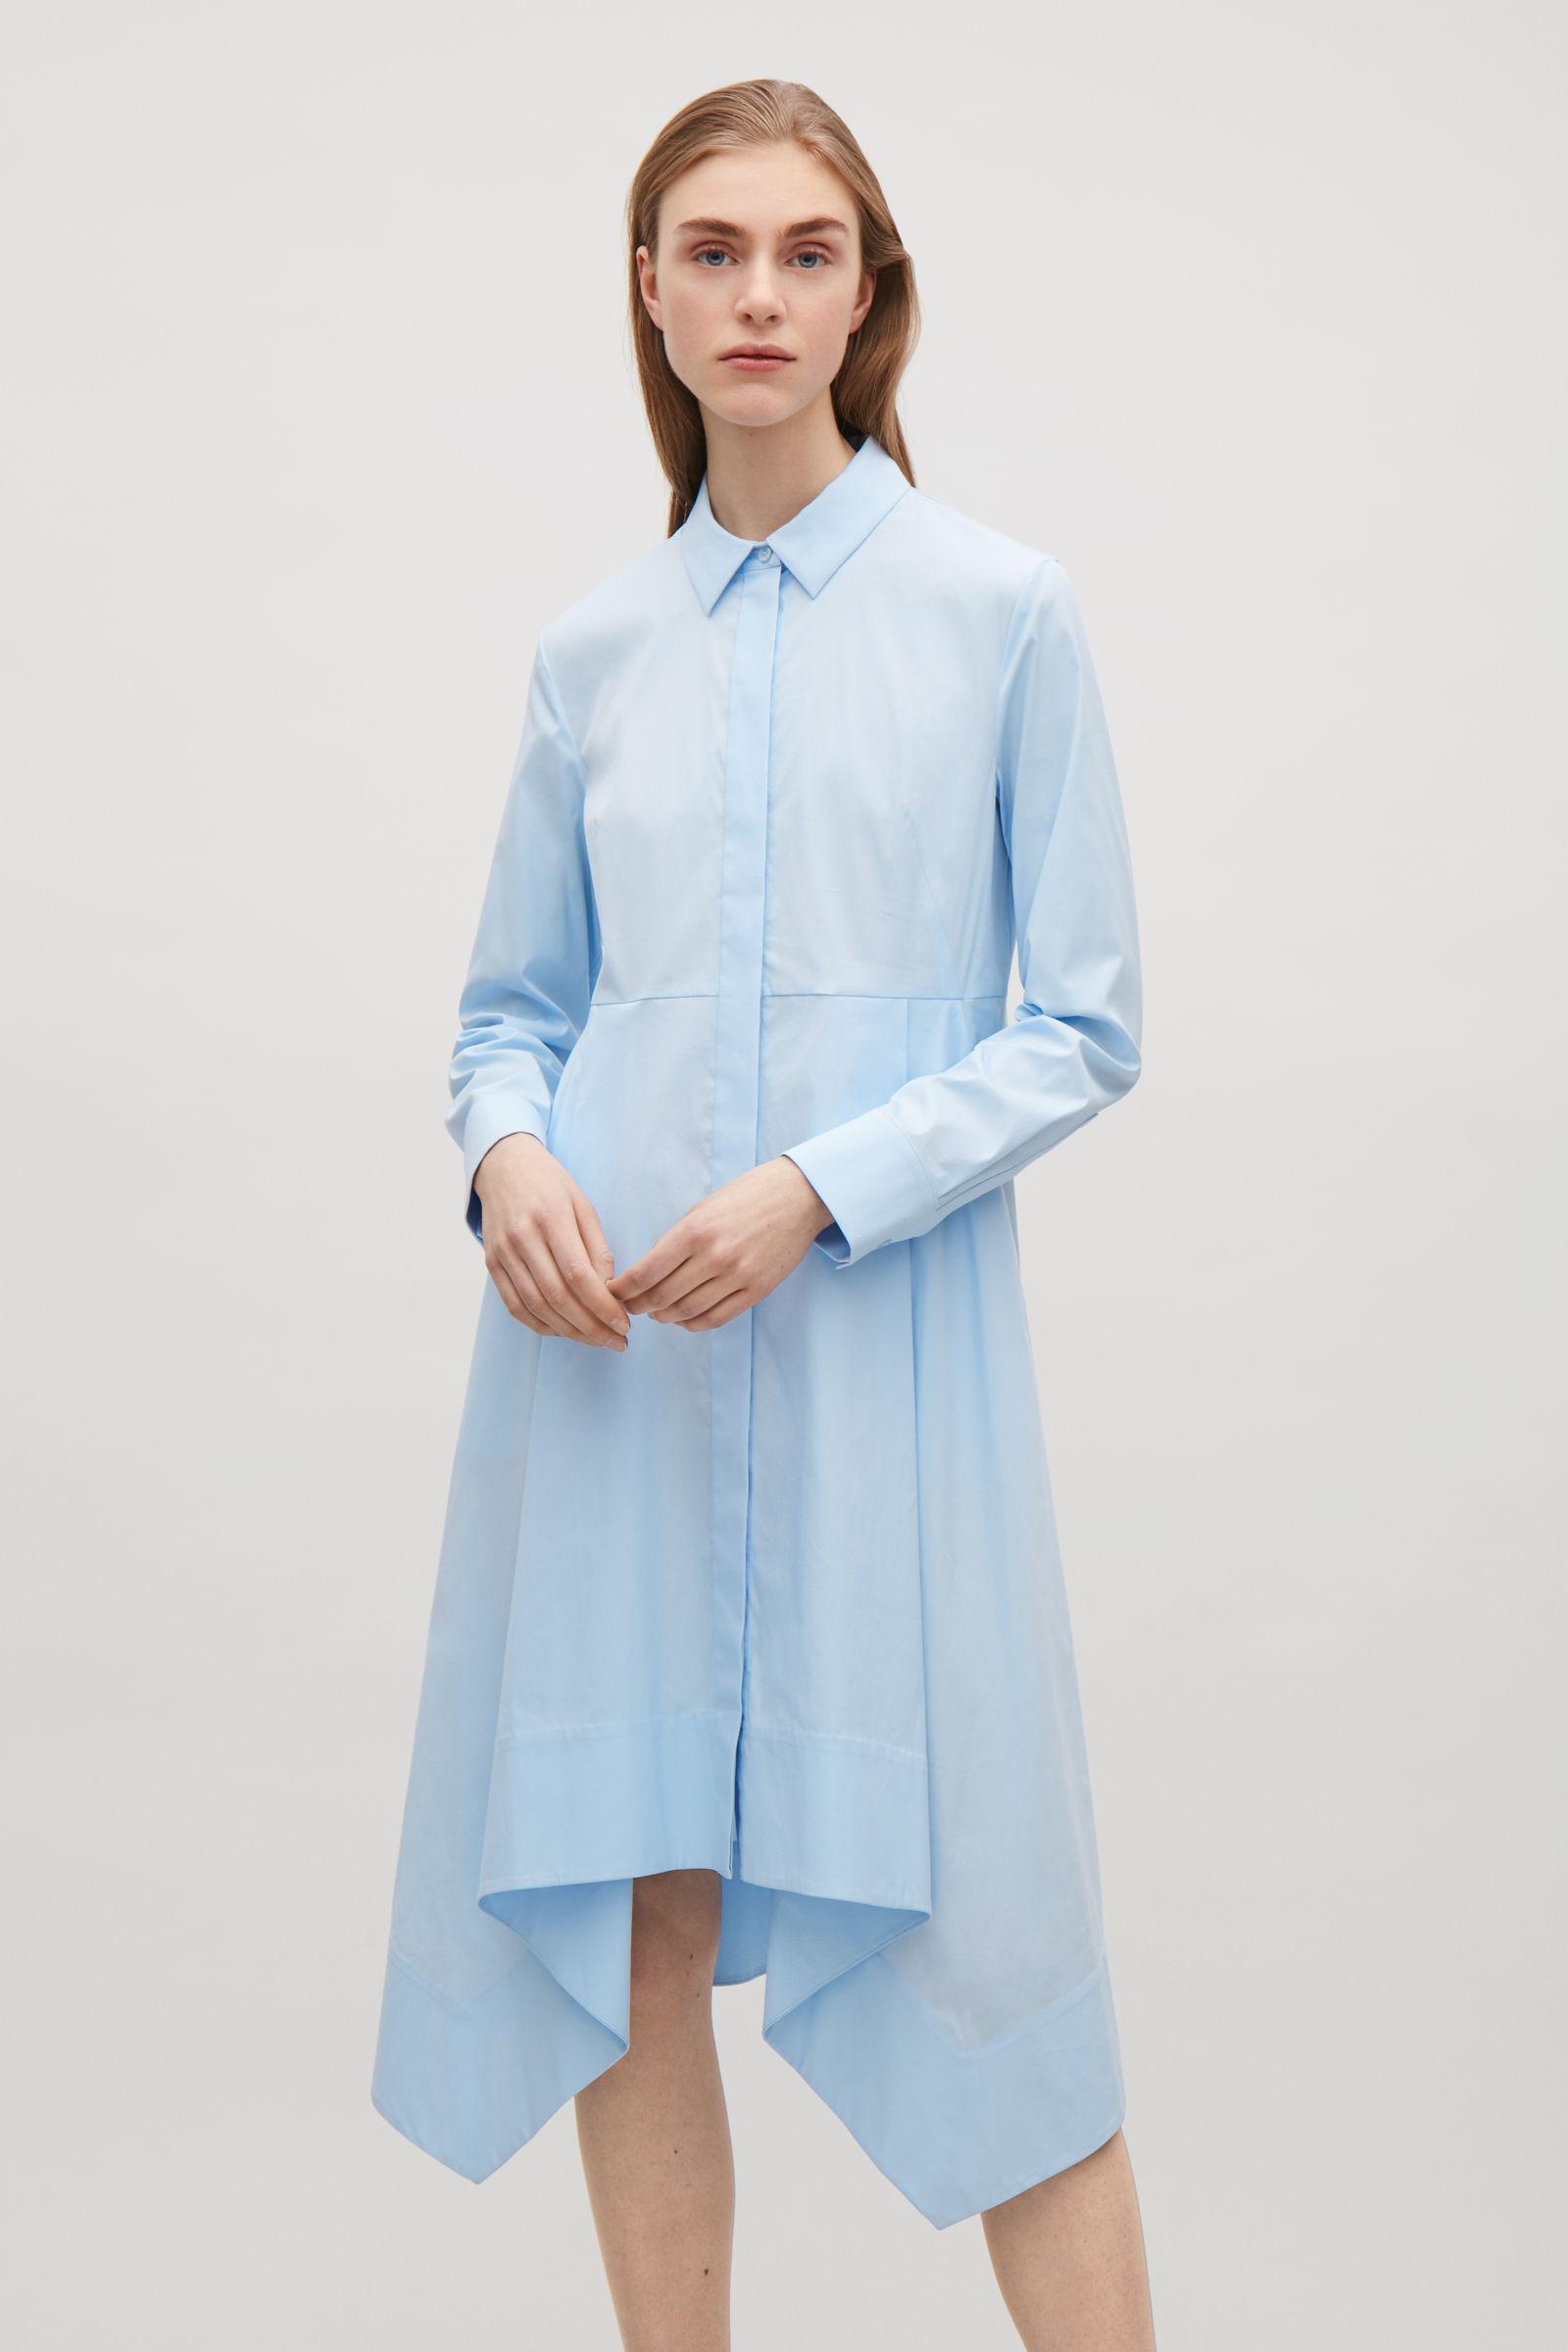 cos light blue dress Big sale - OFF 76%